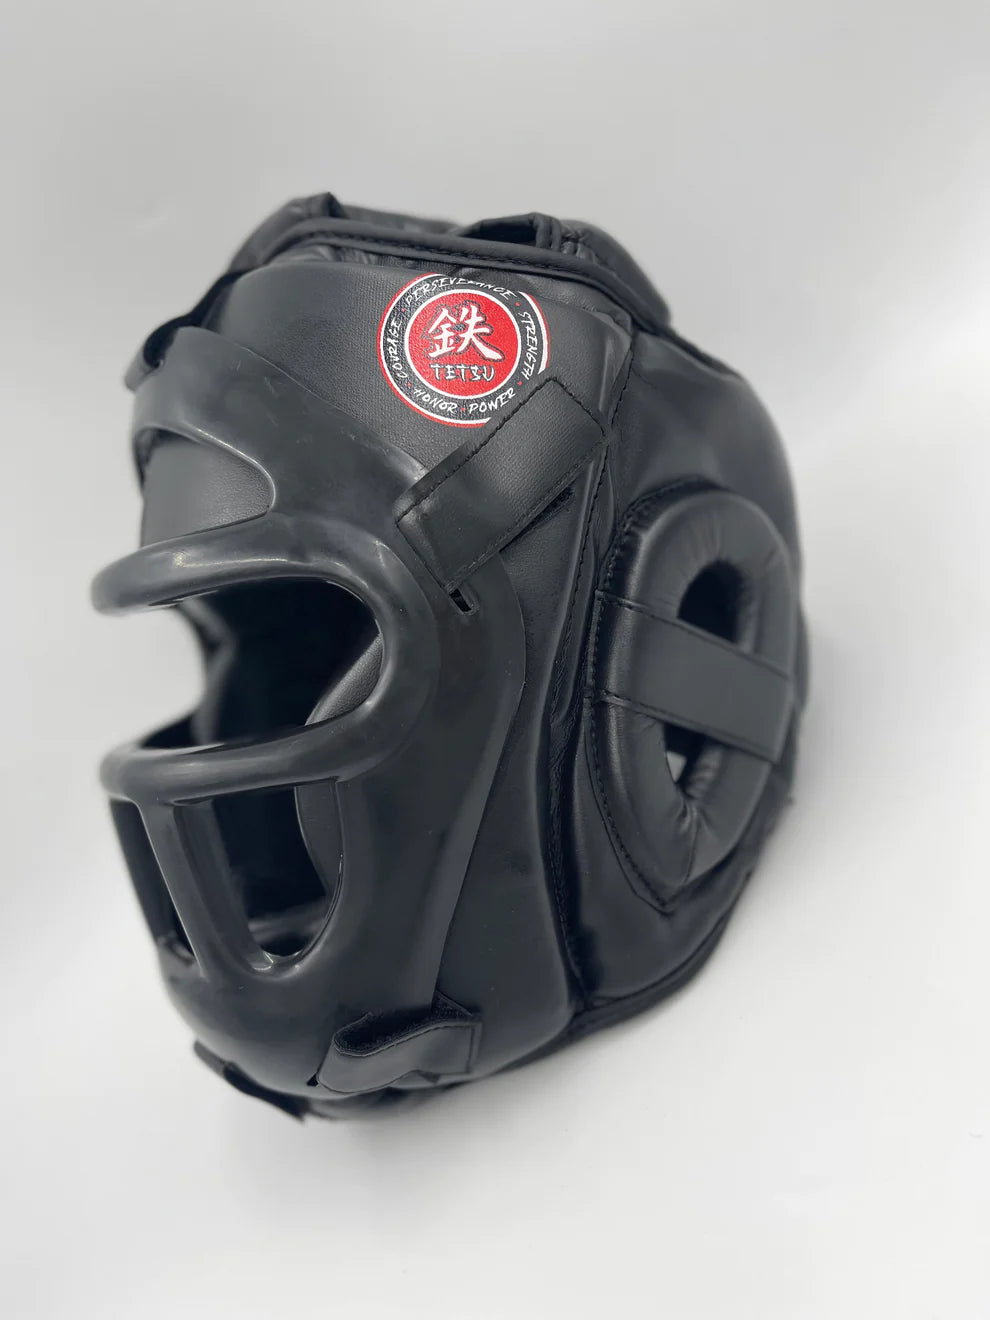 (Pre-Order Only) TETSU Headgear w/ Face Shield